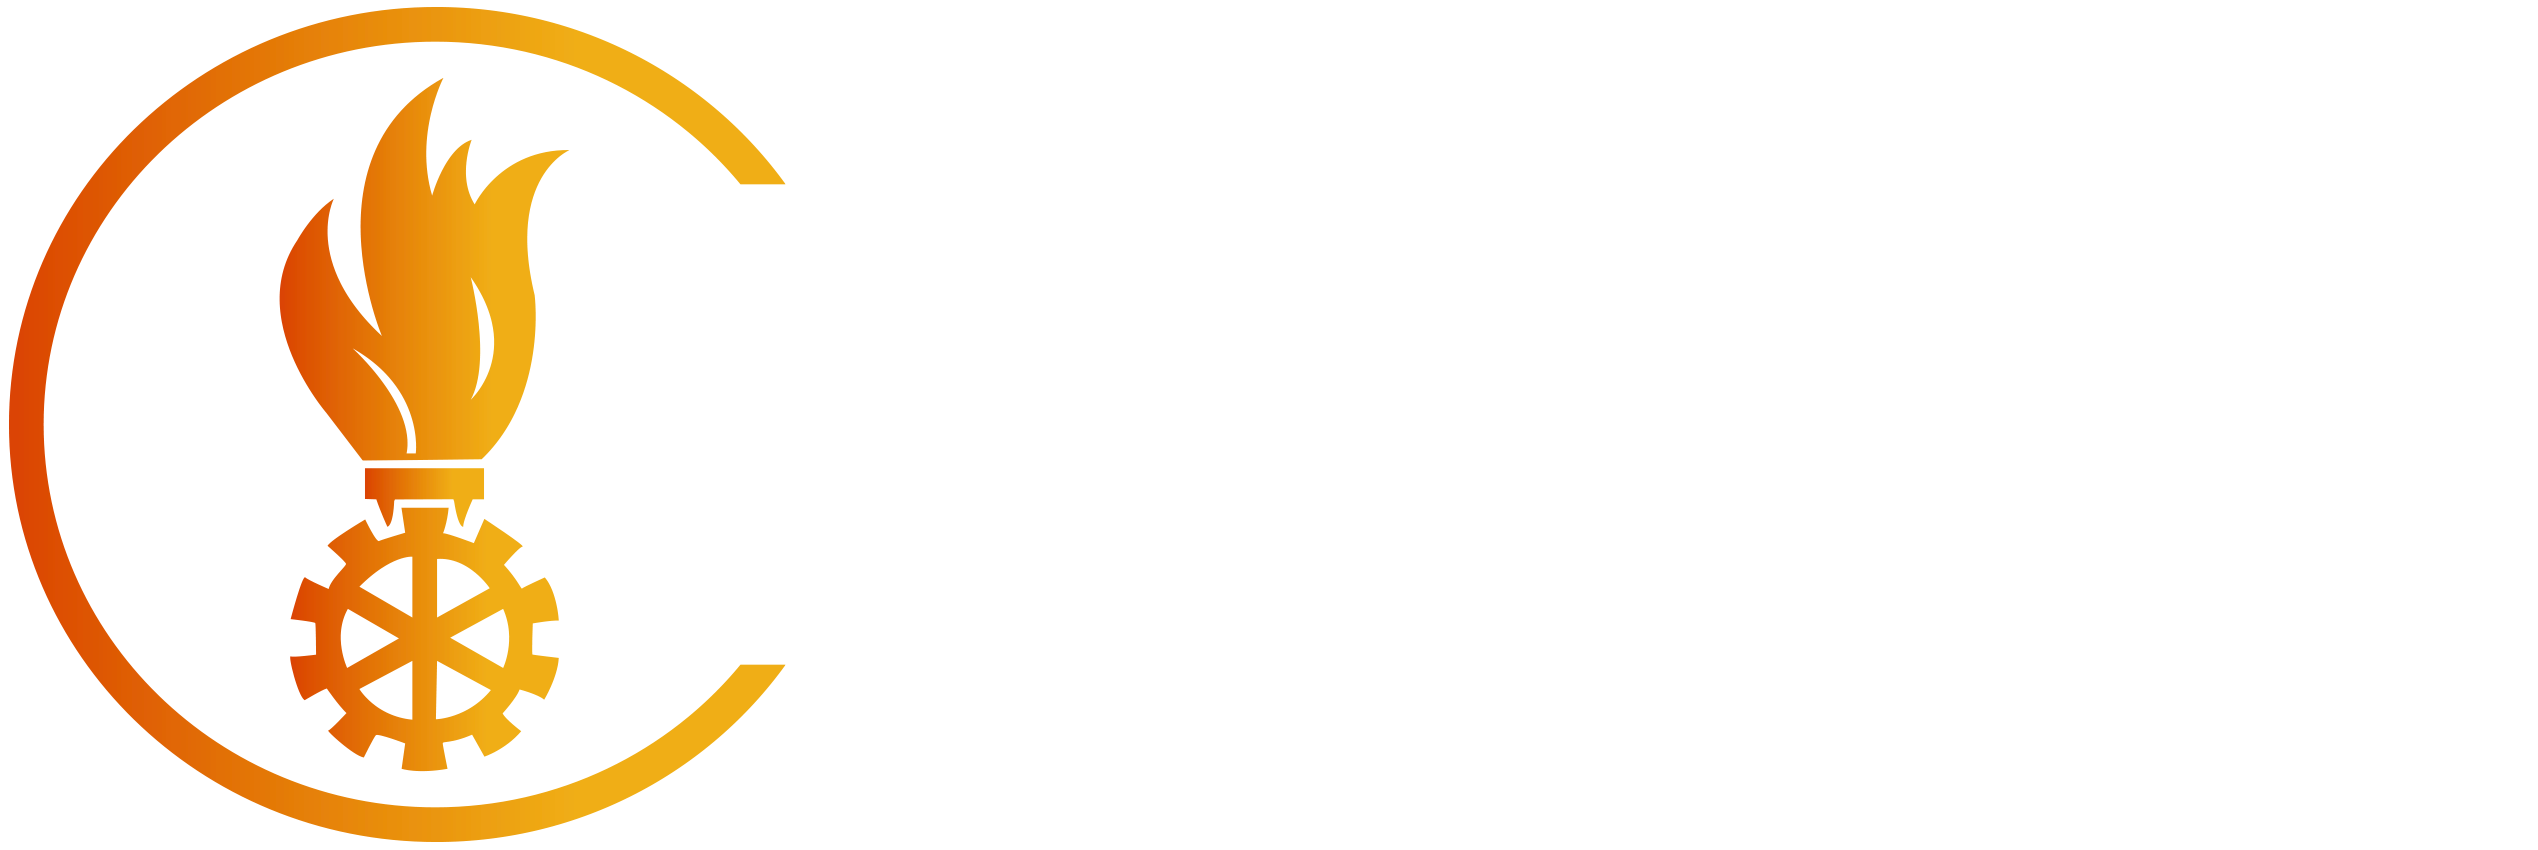 Jugendbetreuer FF St. Georgen/Gusen logo